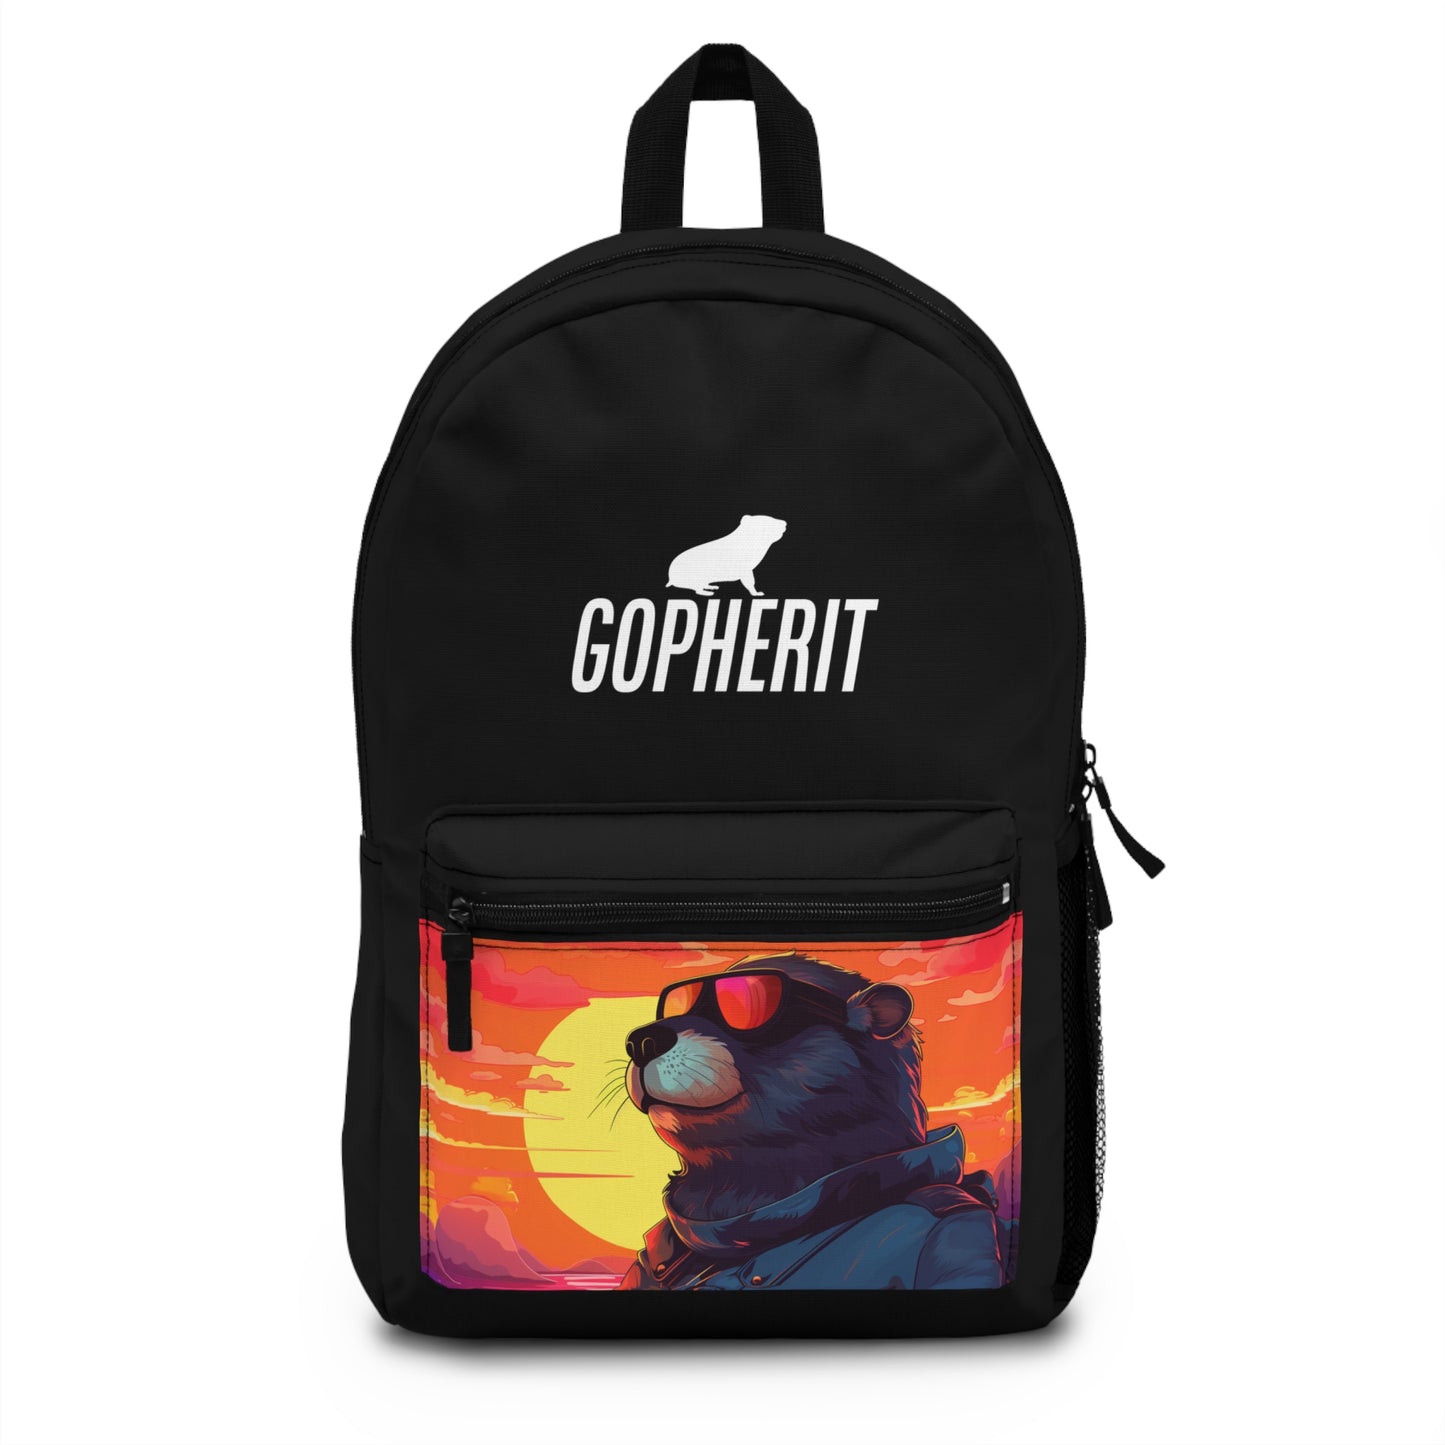 Gopherit Backpack - Sunset Adventure